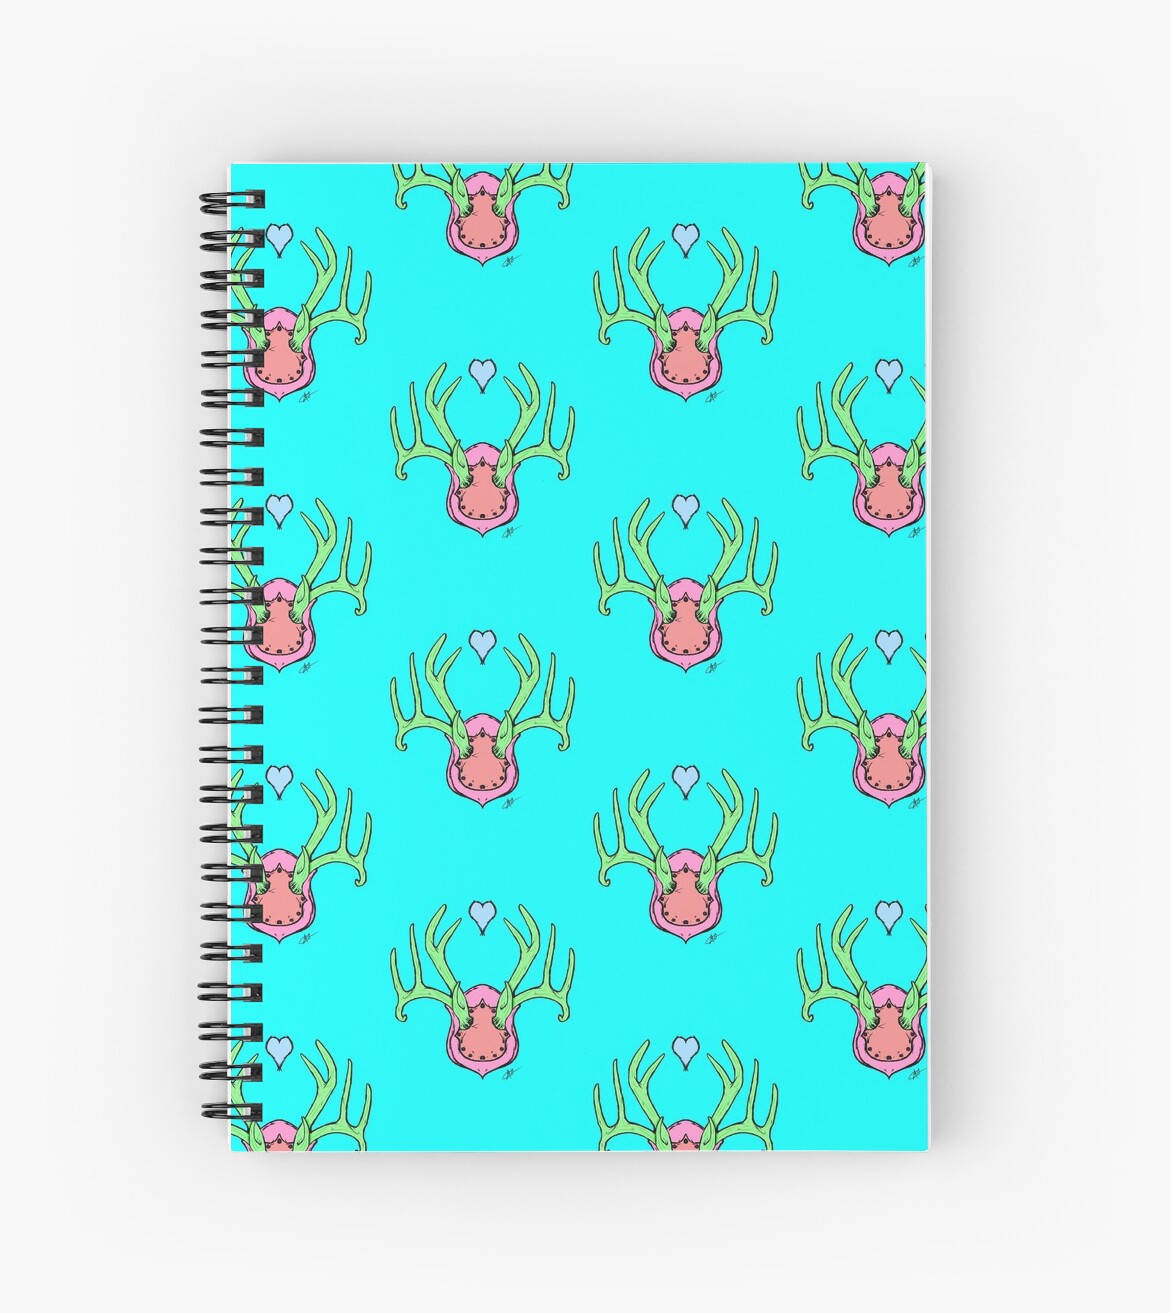 nice notebooks